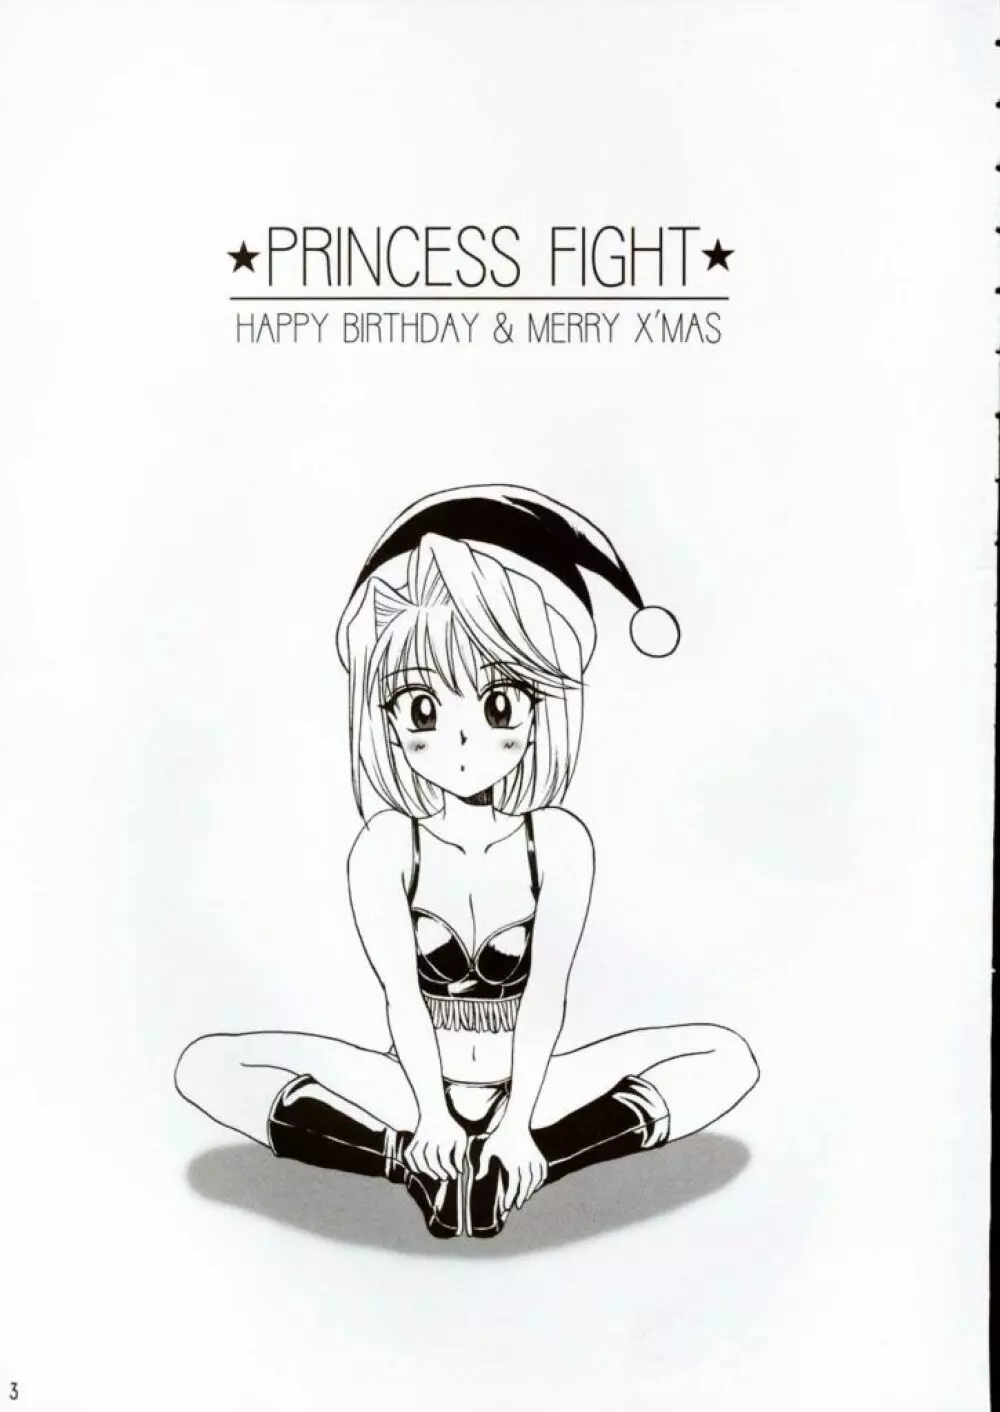 PRINCESS FIGHT HAPPY BIRTHDAY & MERRY X'MAS - page2